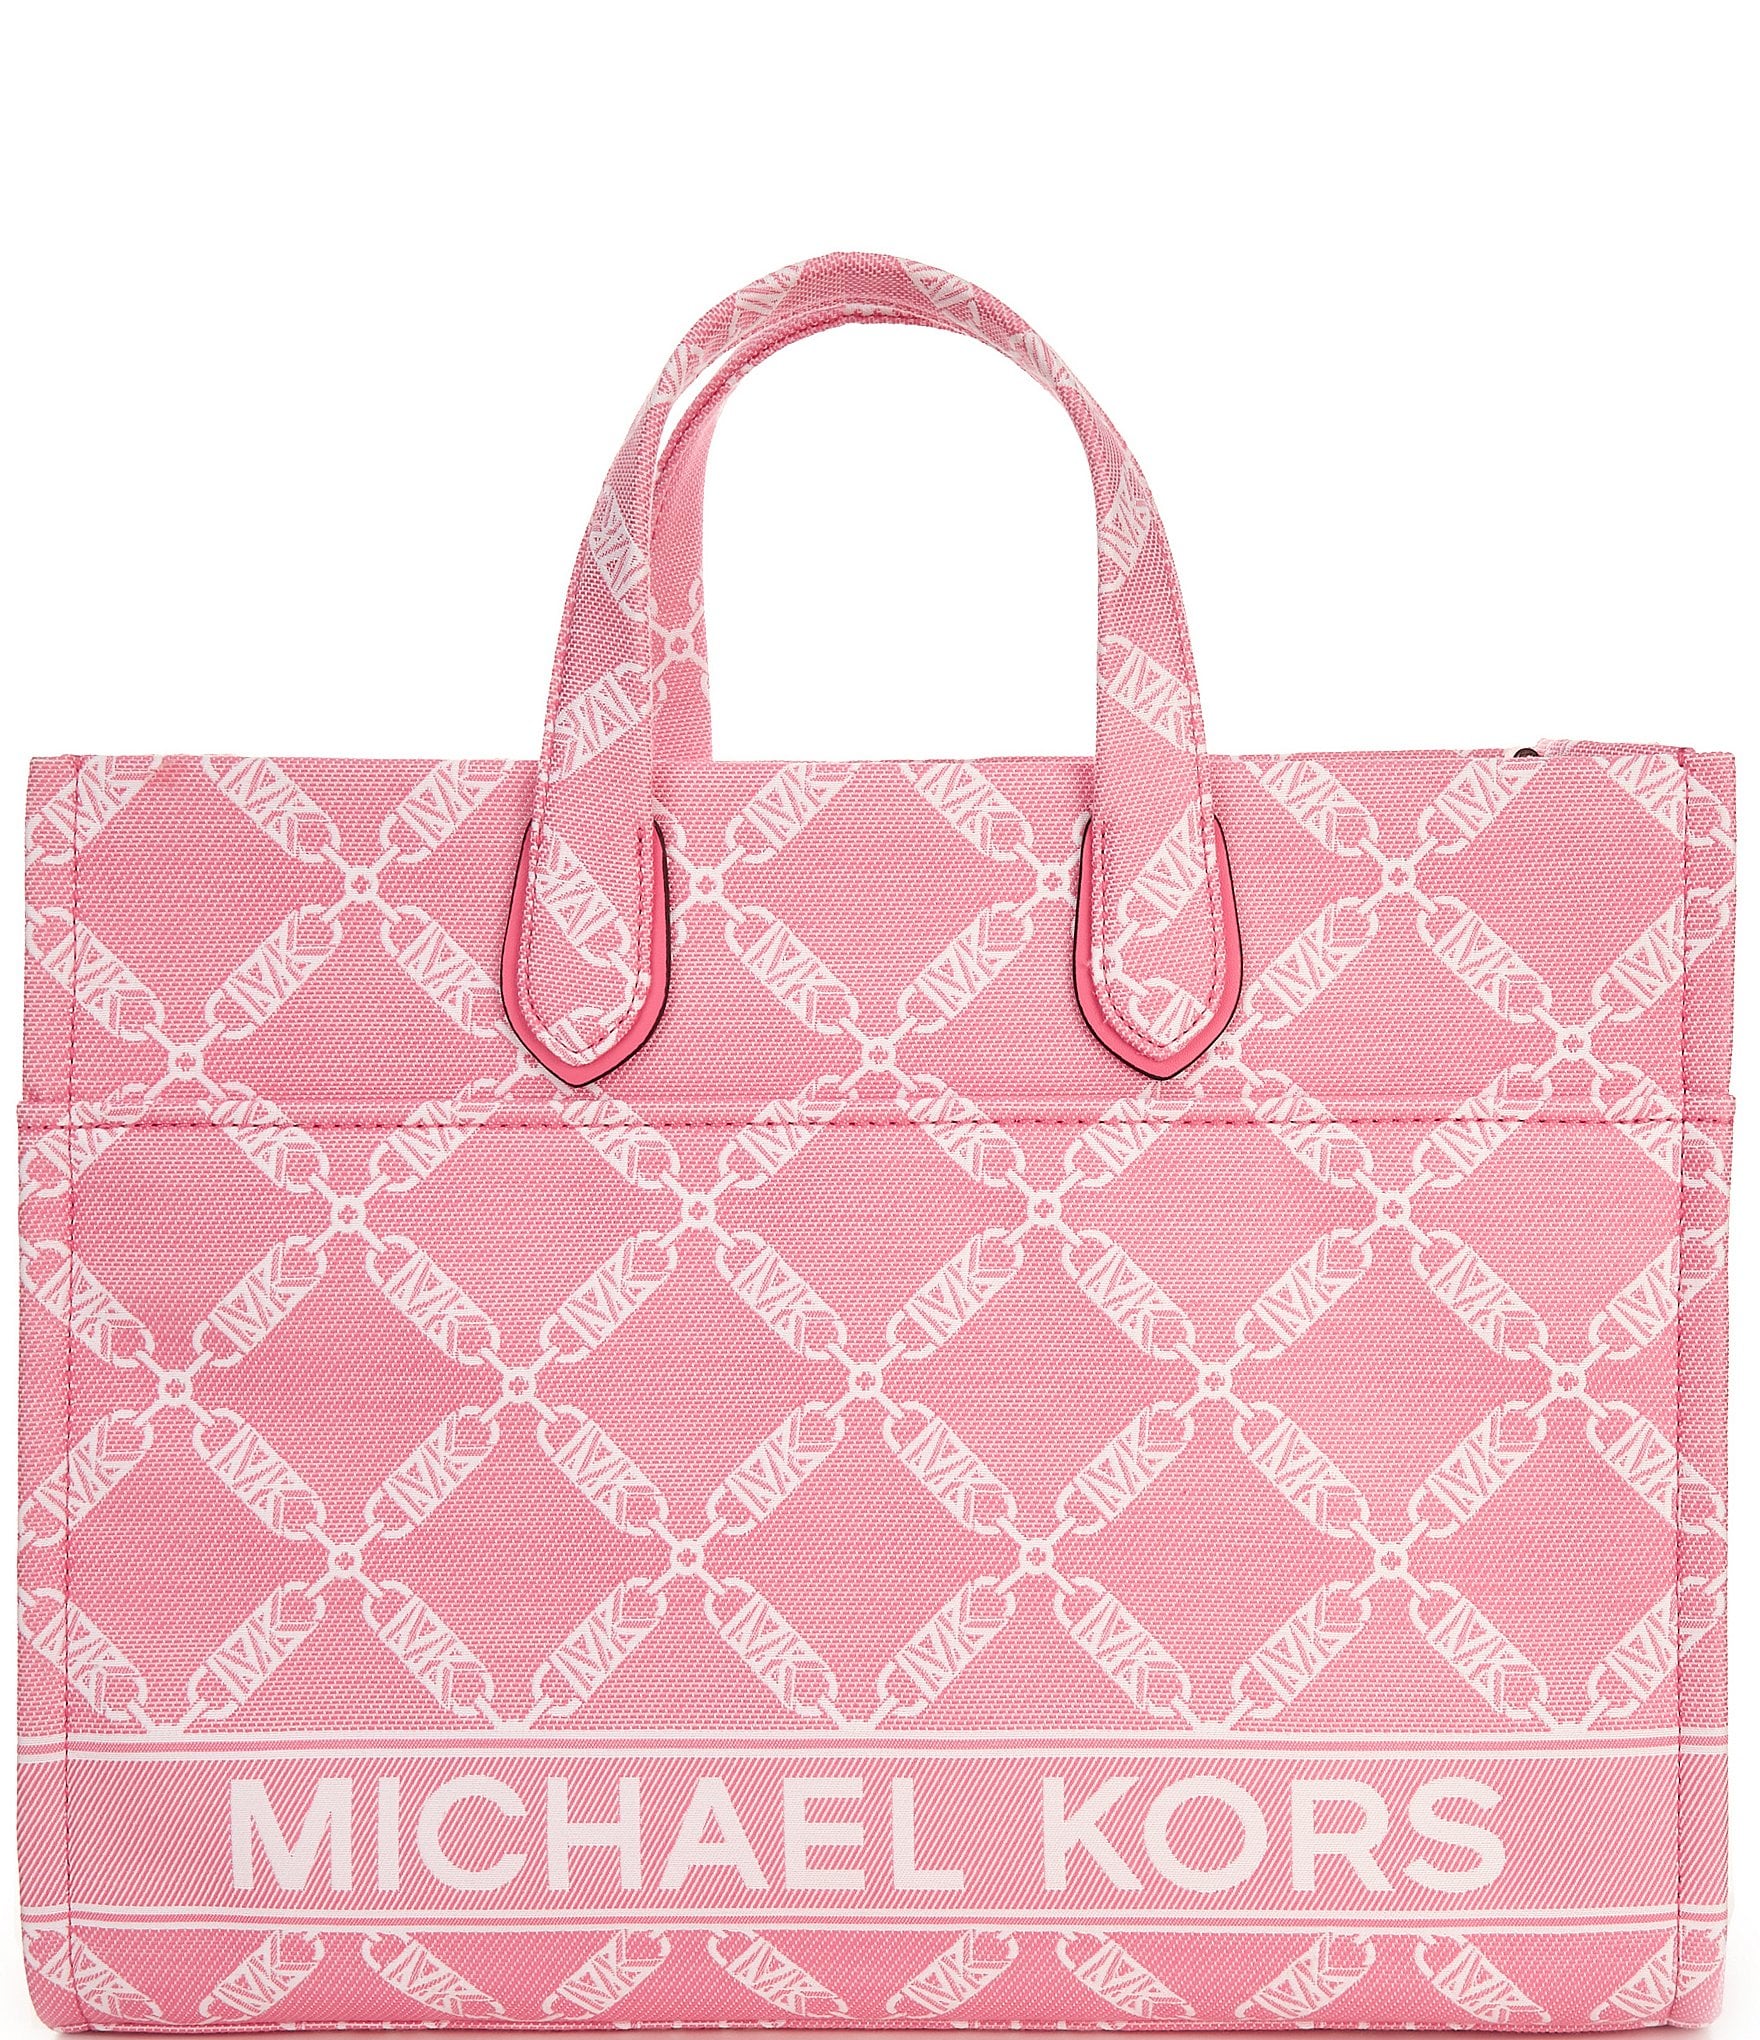 MICHAEL KORS Venus Crossbody Bag Fuschia Pink | Fuschia pink color,  Fuschia, Tassel bag